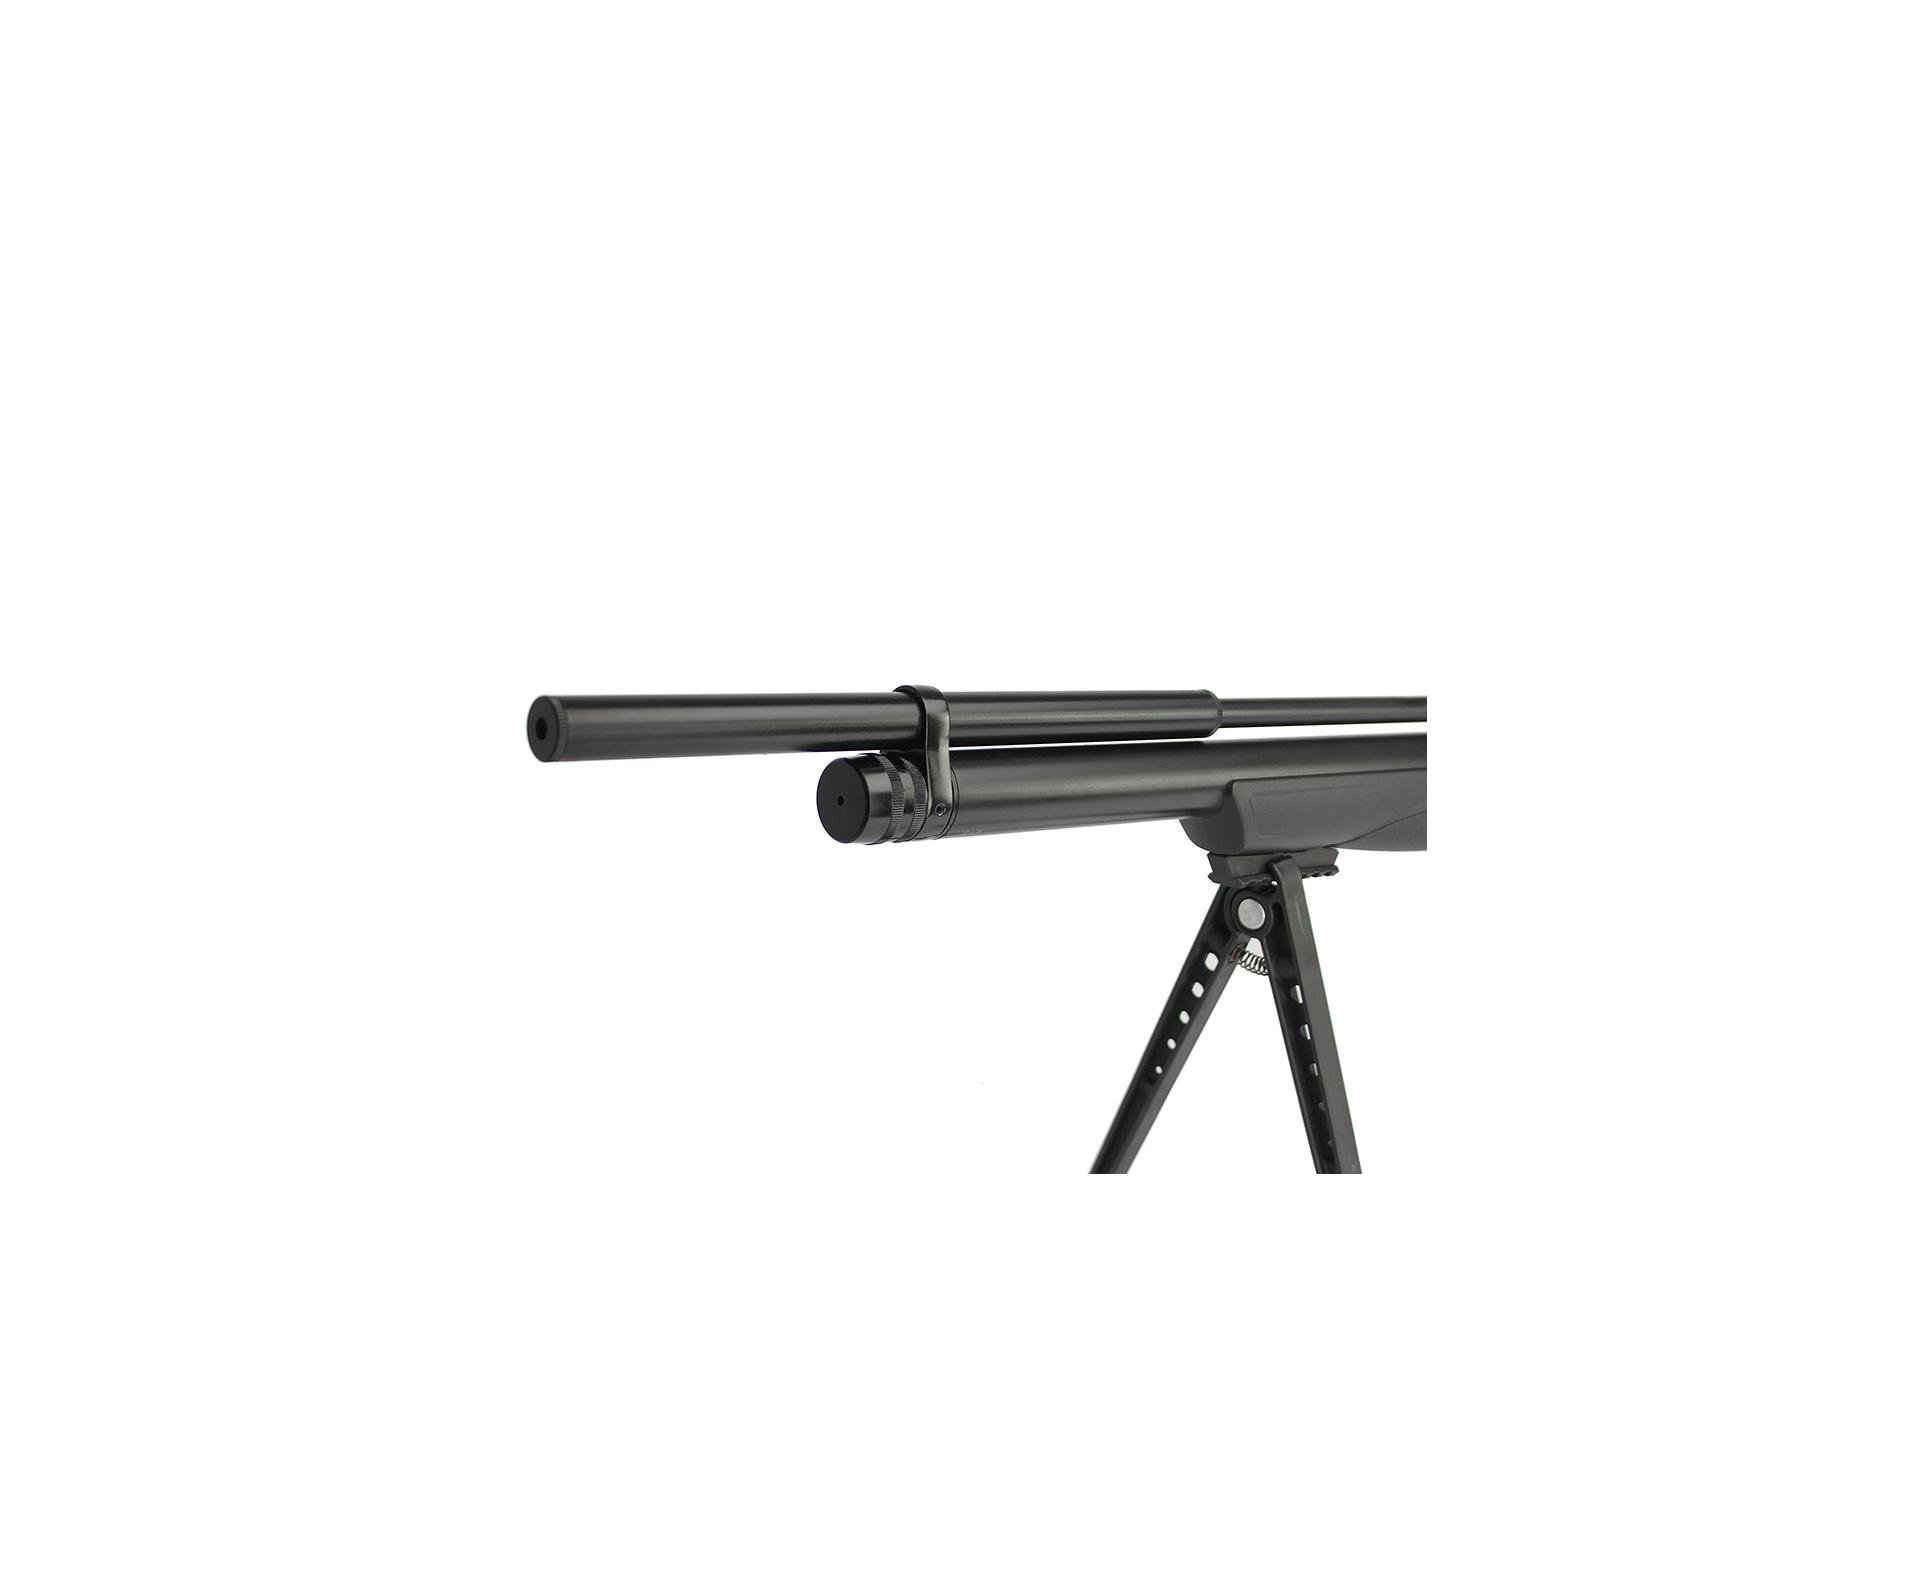 Carabina De Pressão Pcp Puncher Maxi S Silent 6.35mm Kral Arms